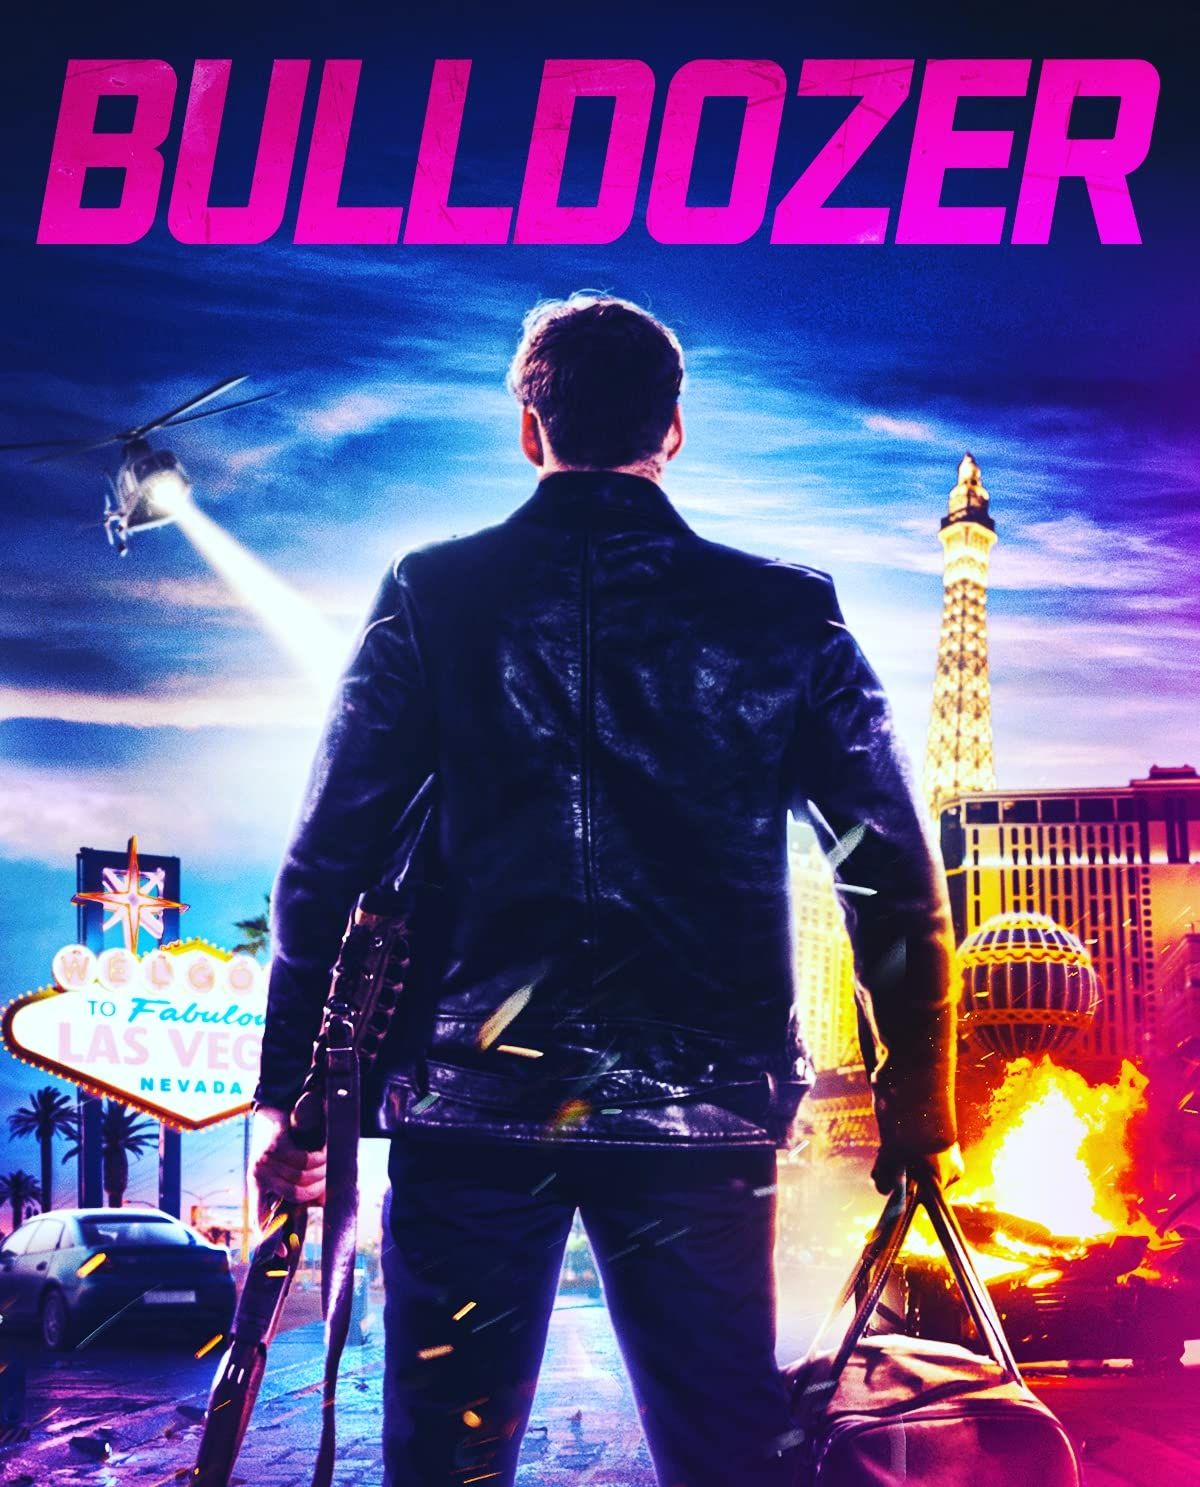 Bulldozer (2021) Hindi Dubbed HDRip download full movie